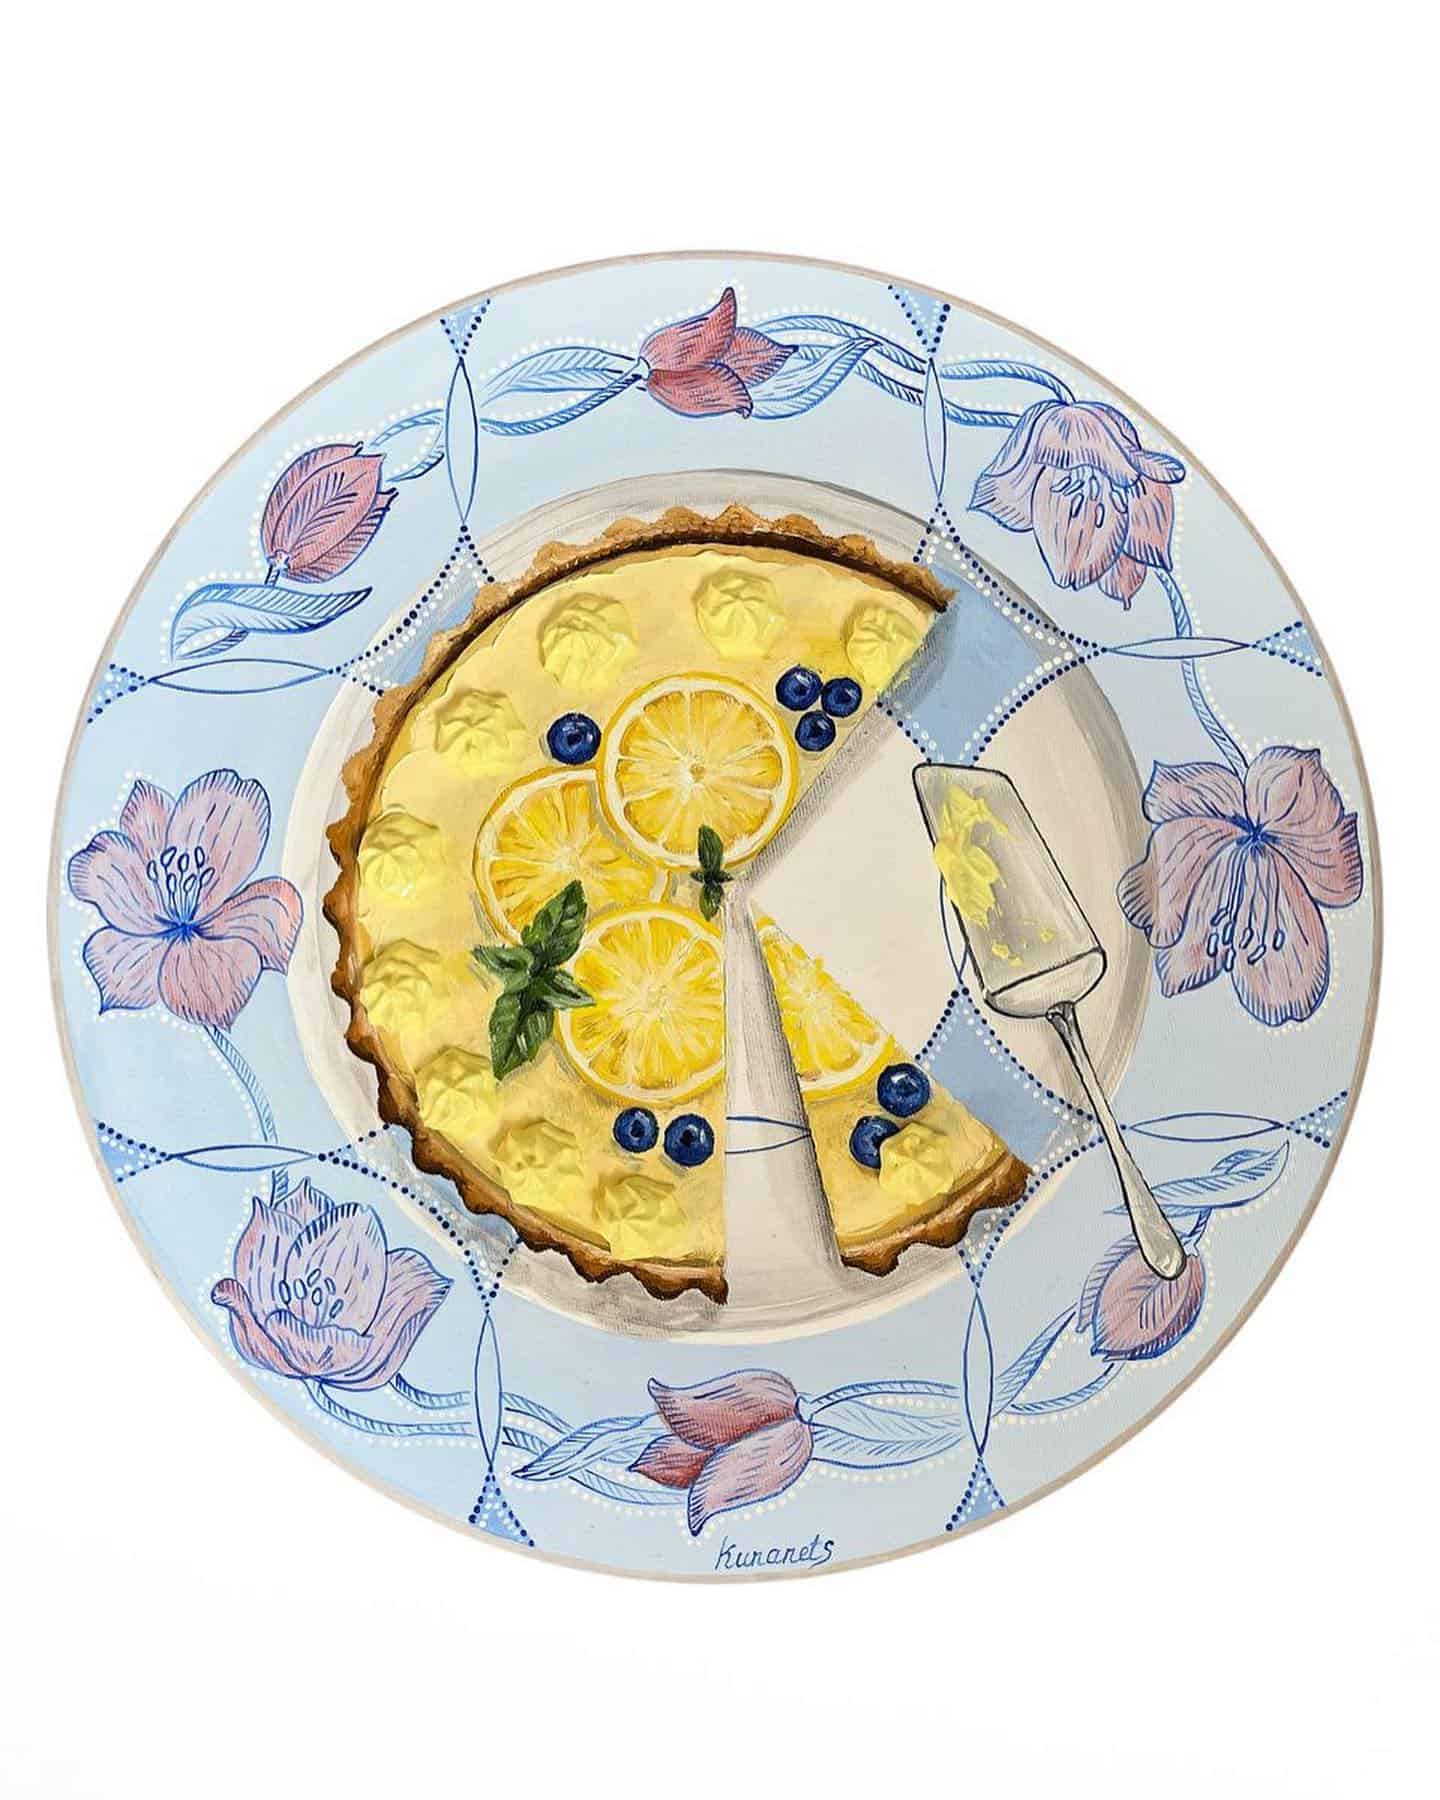 stunning oil painting art of a lemon cheesecake